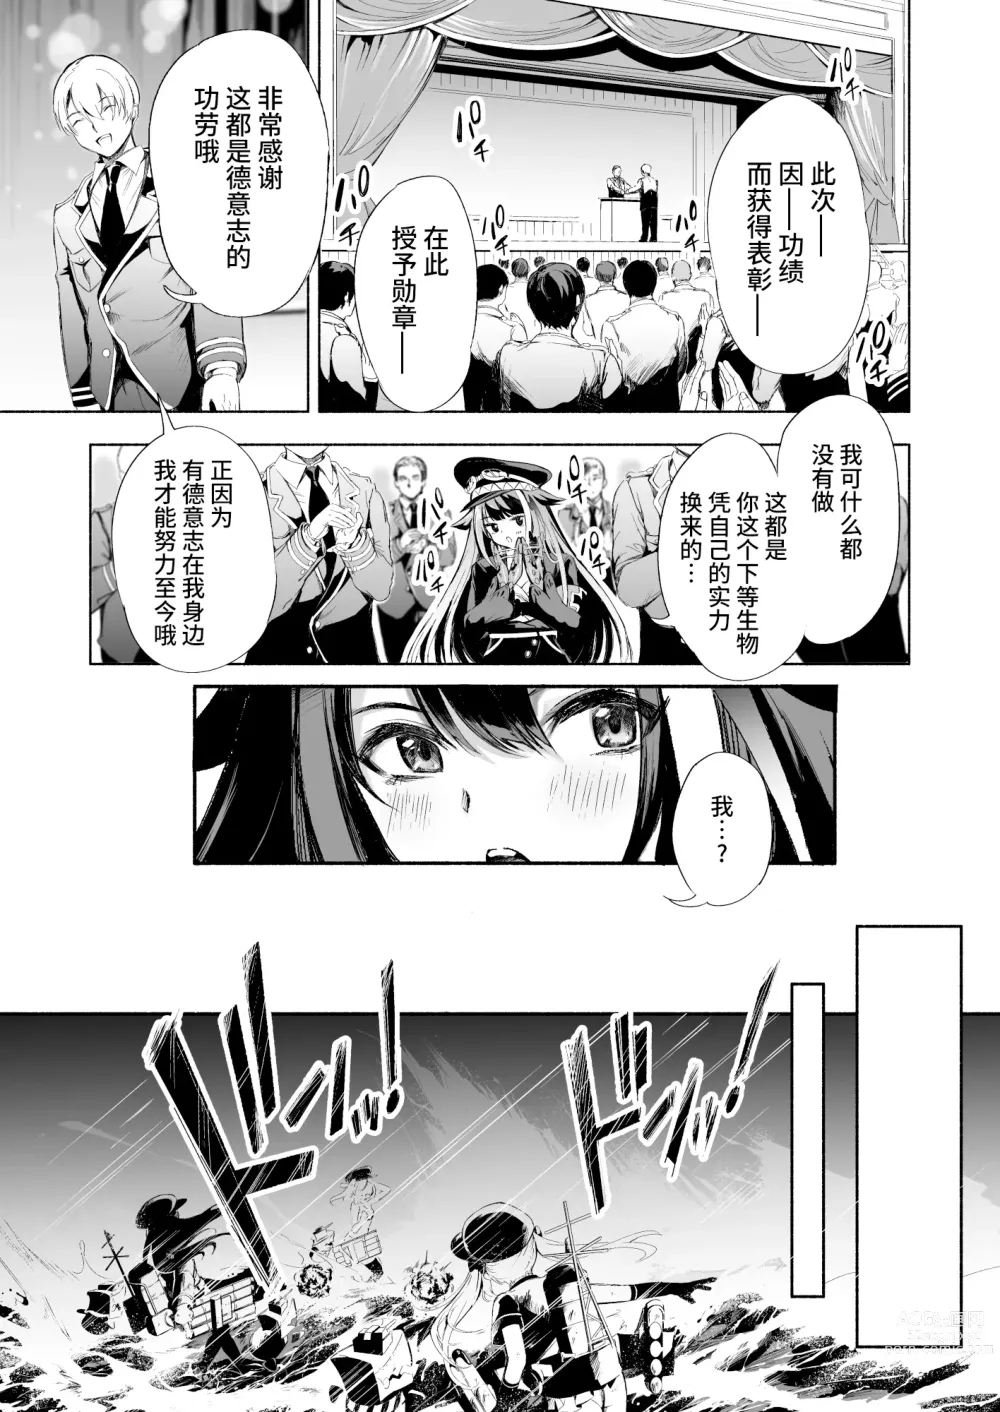 Page 6 of doujinshi 永远爱着你。